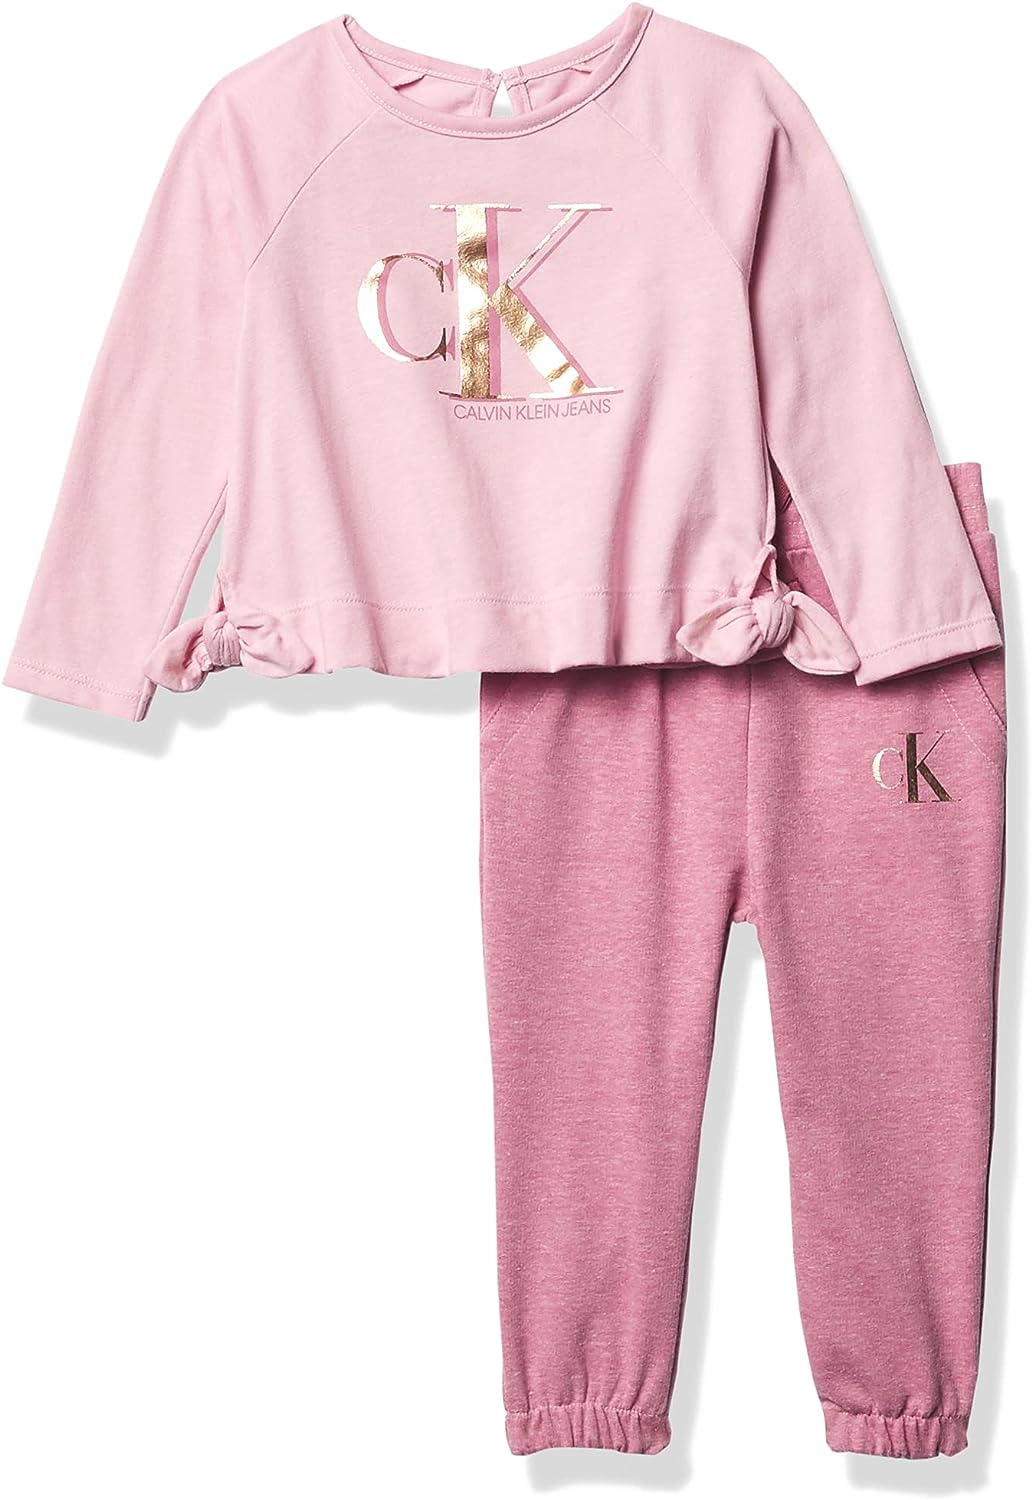 Adorable and Versatile: Calvin Klein Baby Girls' 3-Piece Set in Rose ...